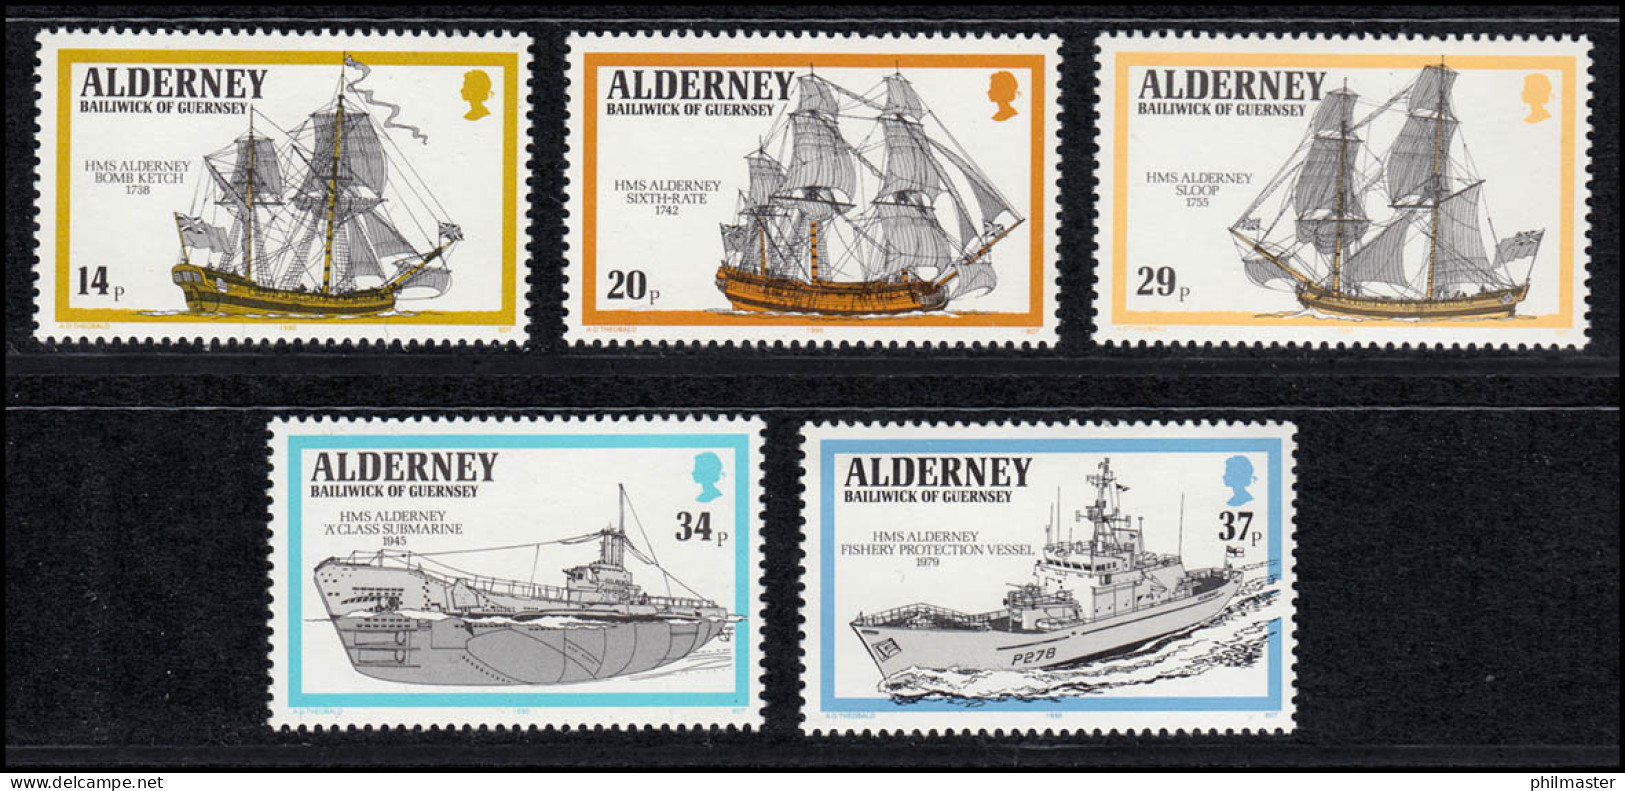 43-47 Guernsey-Alderney Jahrgang 1990, Postfrisch ** / MNH - Alderney